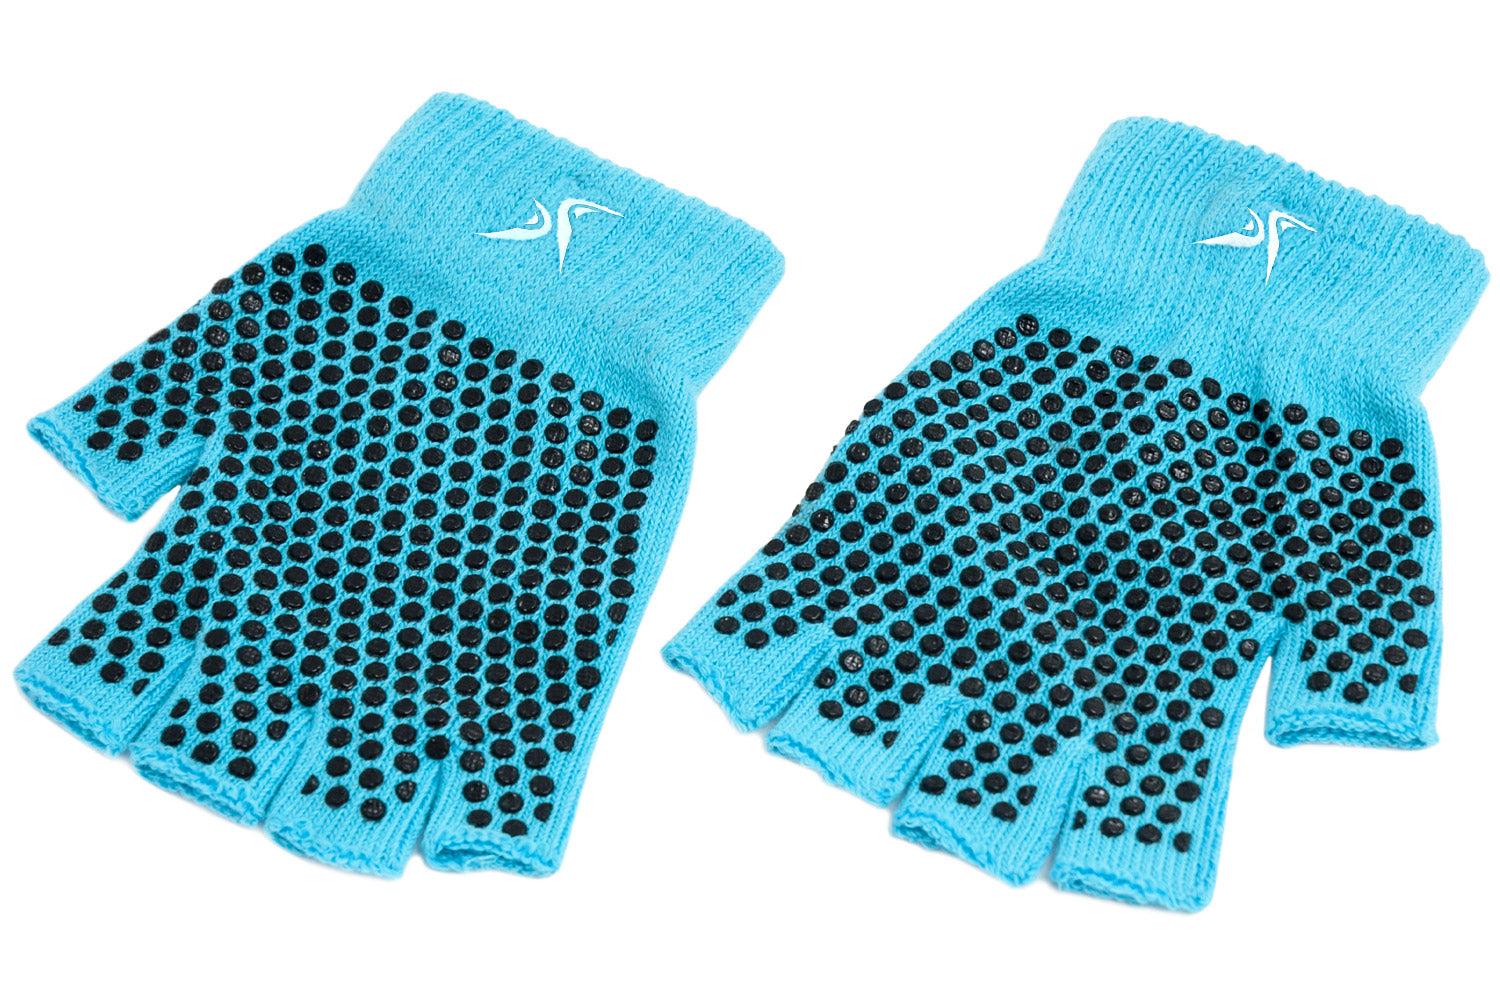  CURELIX Yoga Gloves for Women, Anti-Slip Gloves for Yoga,  Pilates, Barre, Ballet, Bikram. Fingerless Design, One Size Fits Most  (Black) : Sports & Outdoors